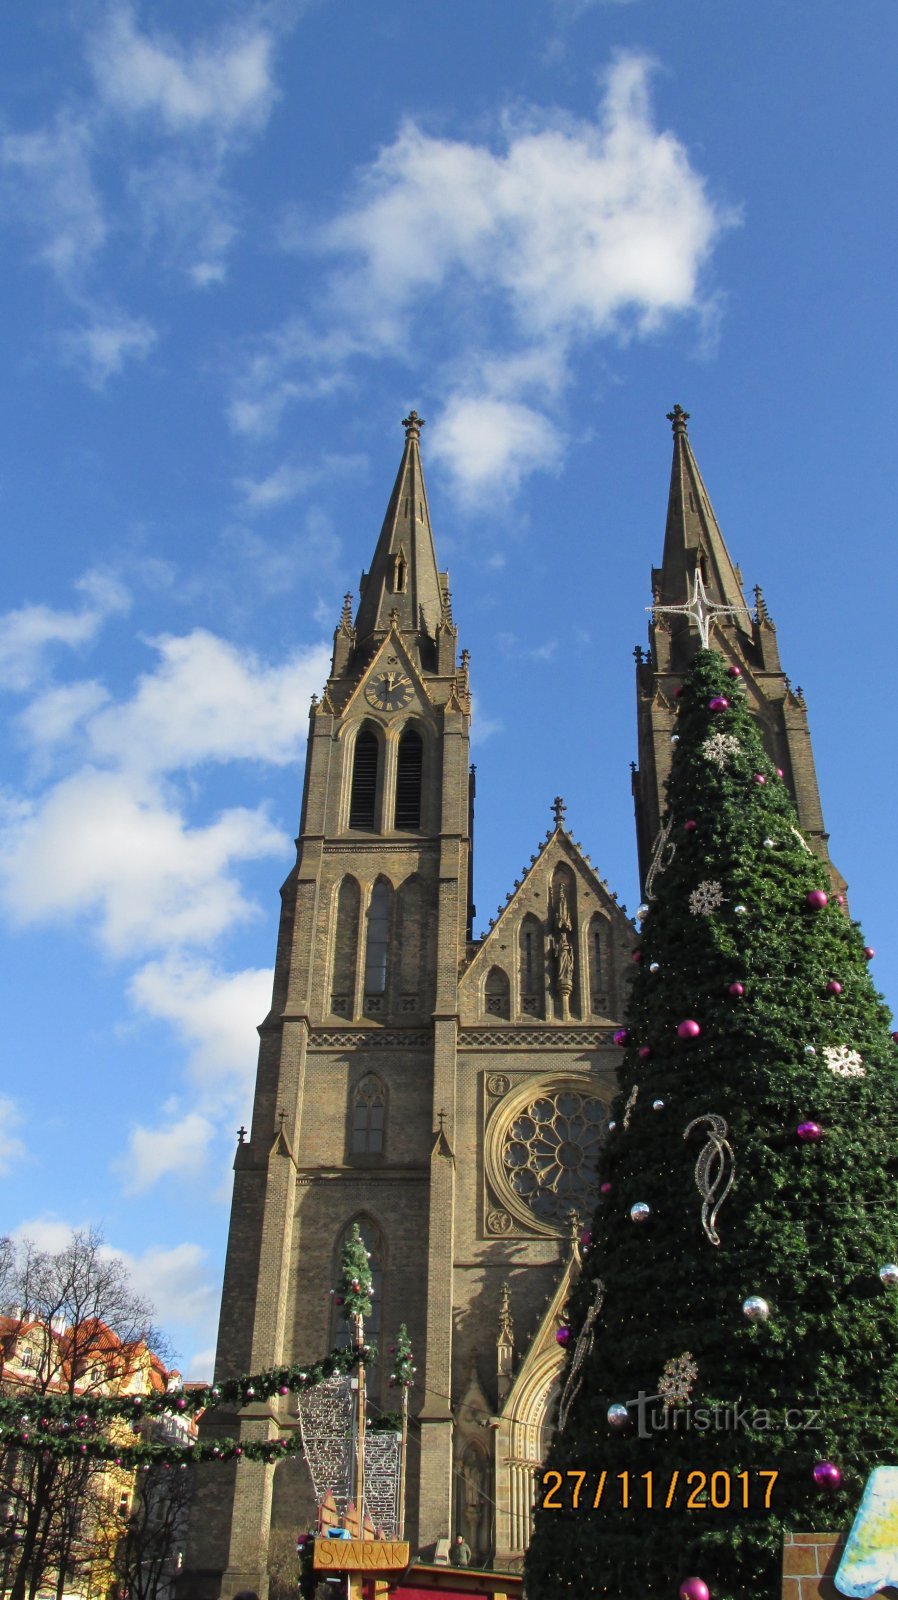 Mercados de Natal no Castelo de Praga e na Igreja de Santa Ludmila